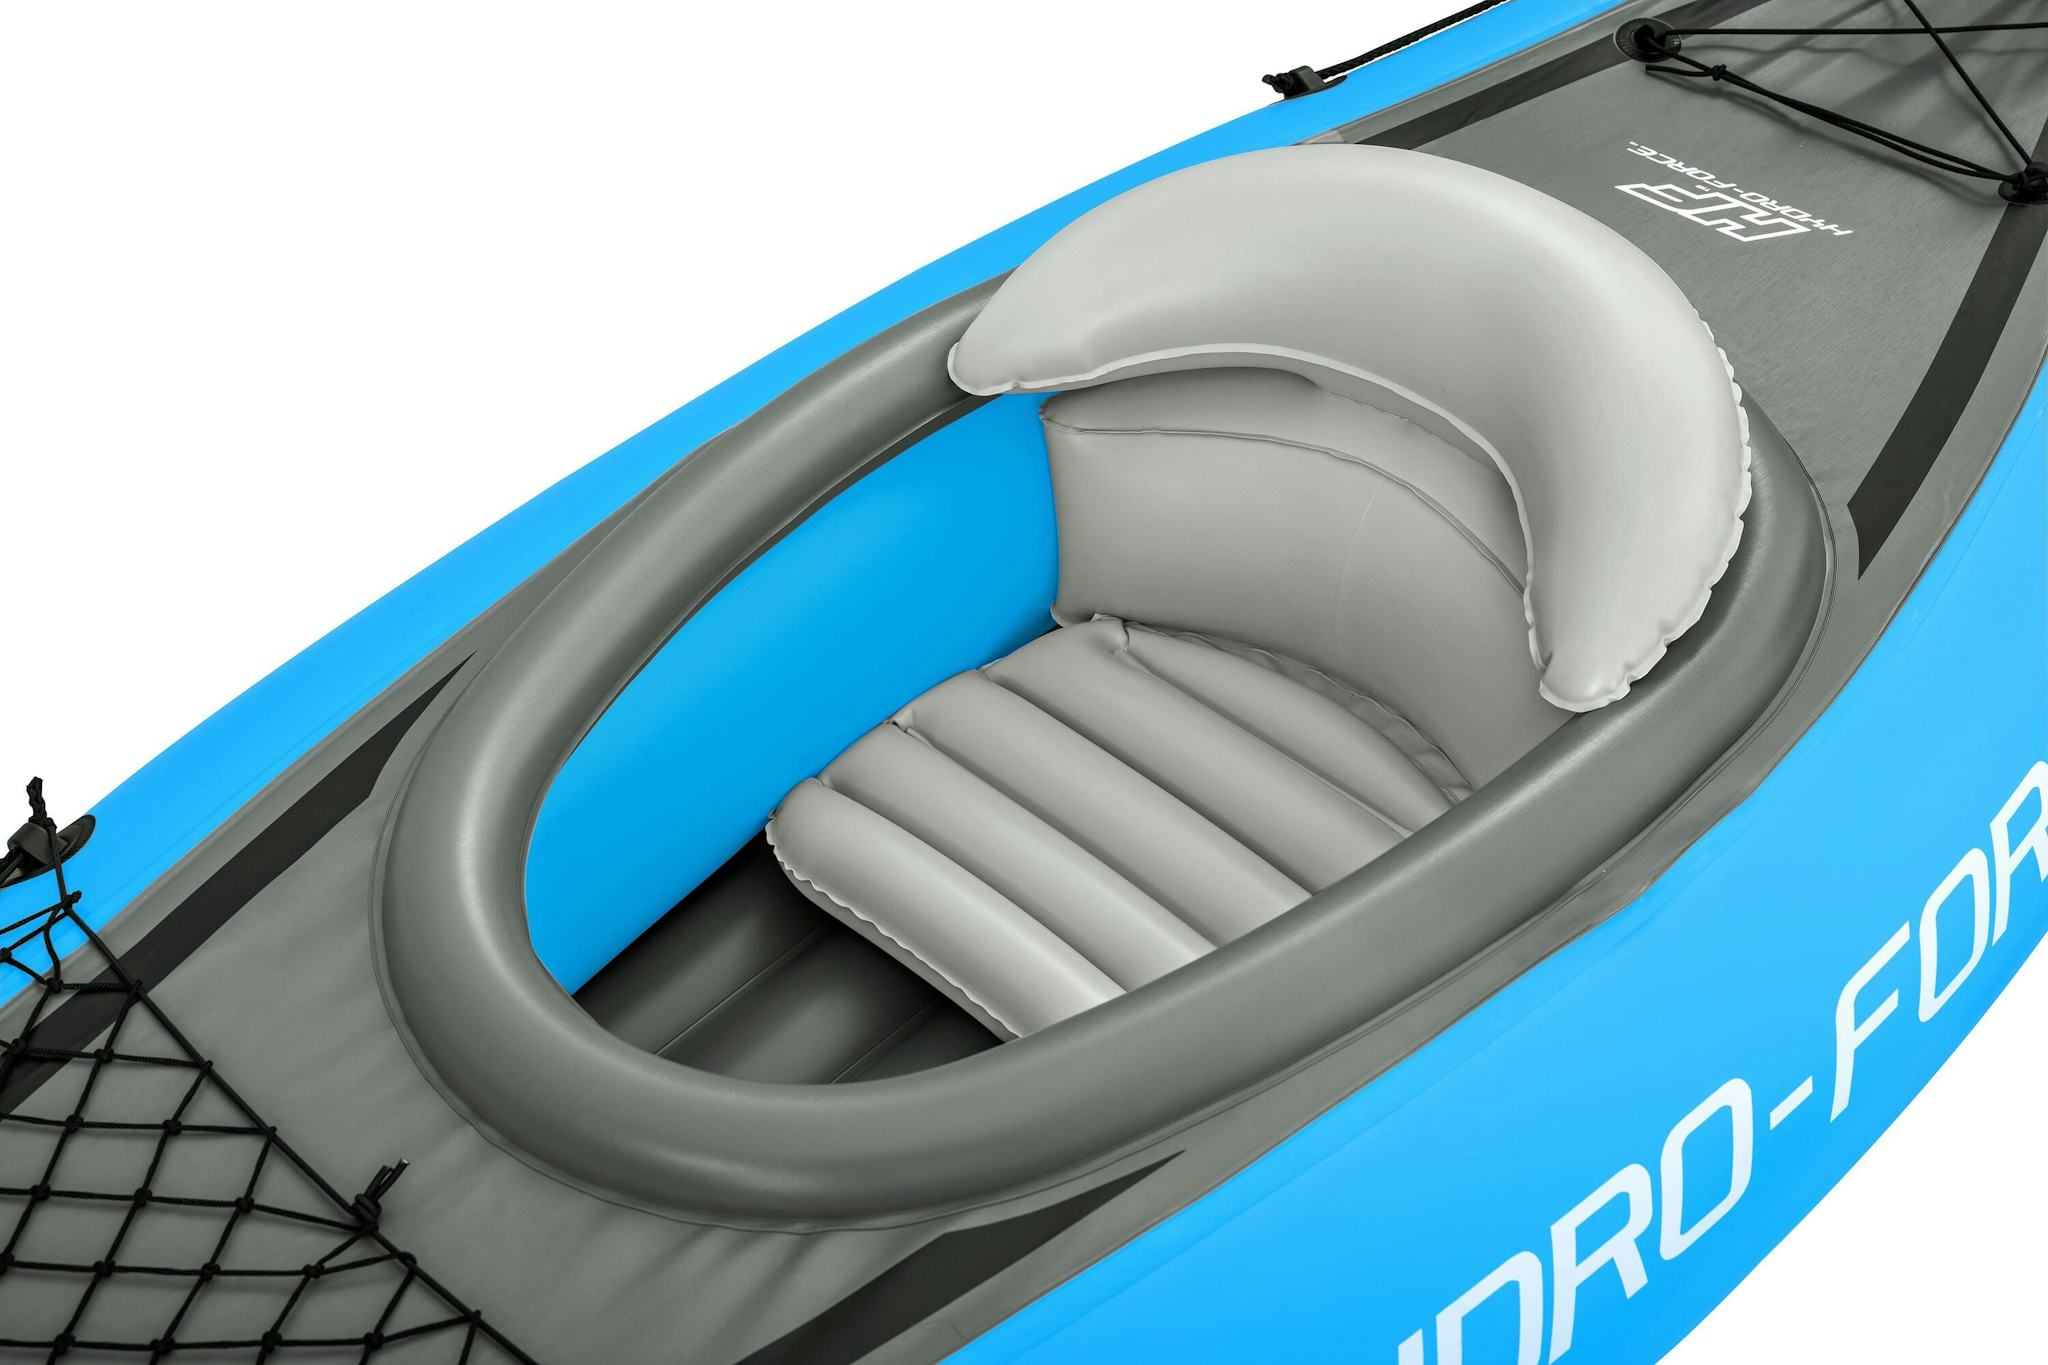 Sports d'eau Kayak gonflable Cove Champion Hydro-Force™ 275 x 81 cm Bestway 7